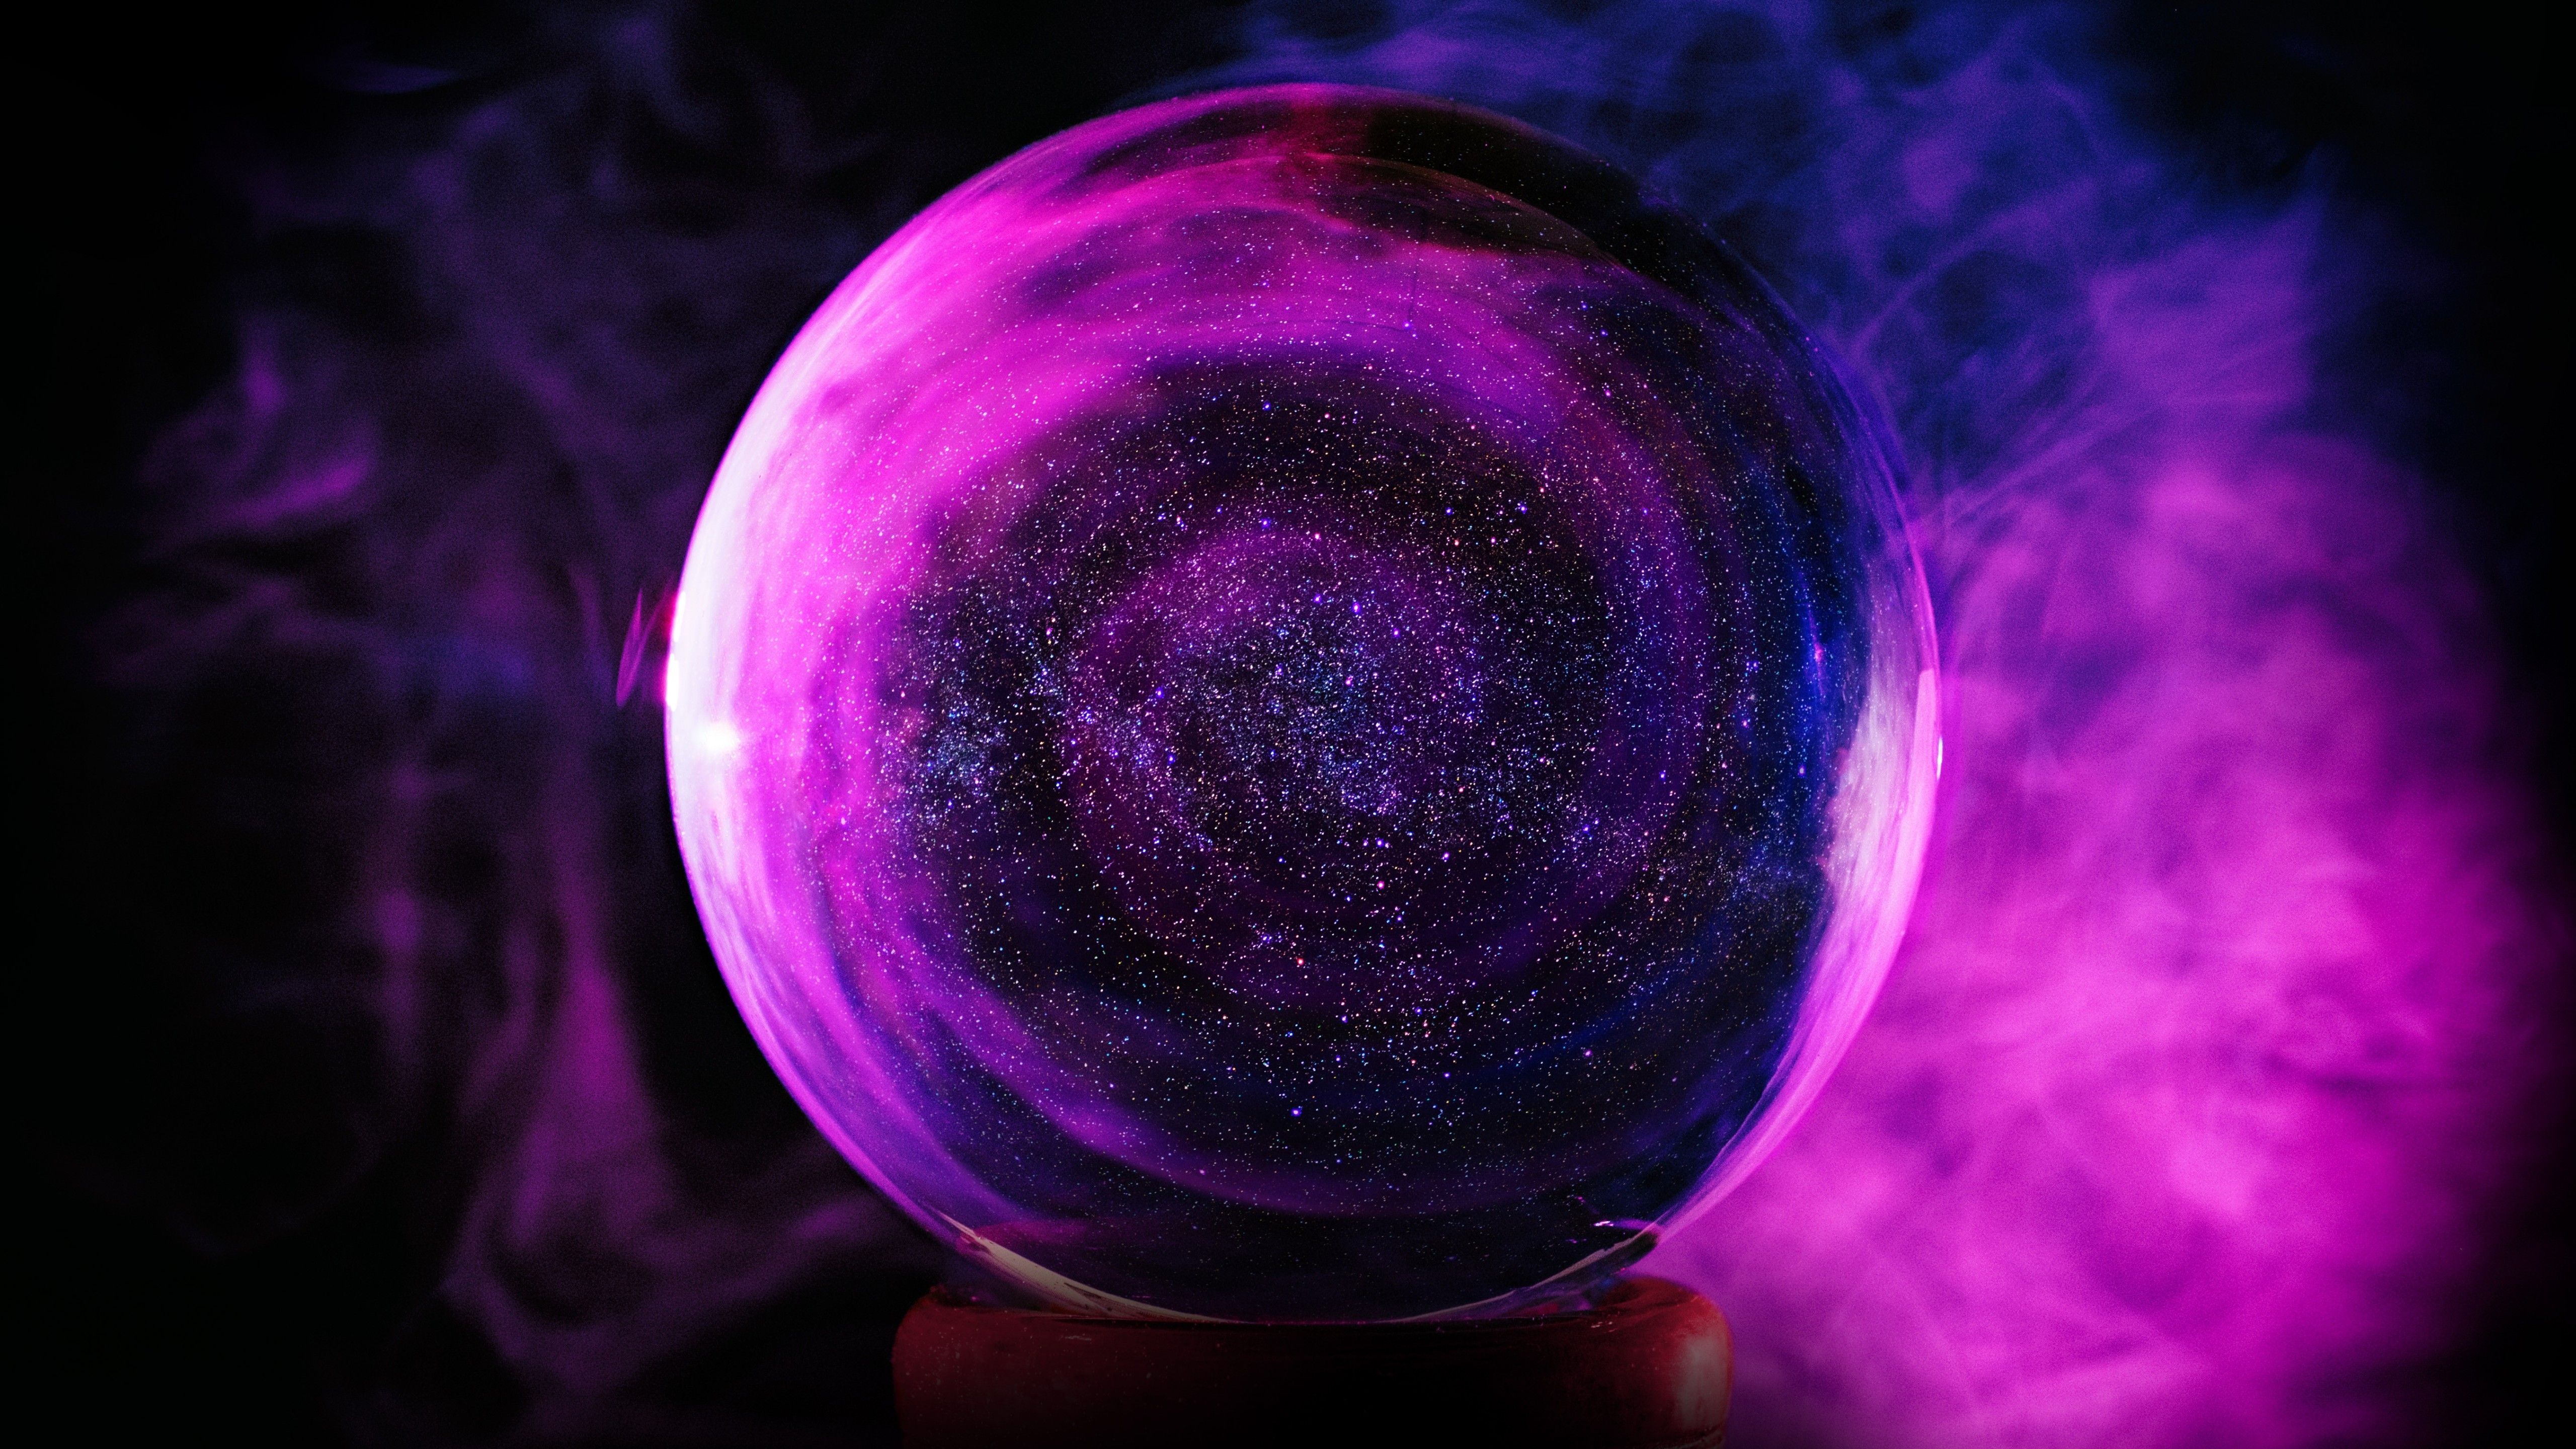 Crystal Ball 4K Wallpaper, Purple Smoke, Glass Ball, Black background, Sphere Balls, 5K, Abstract